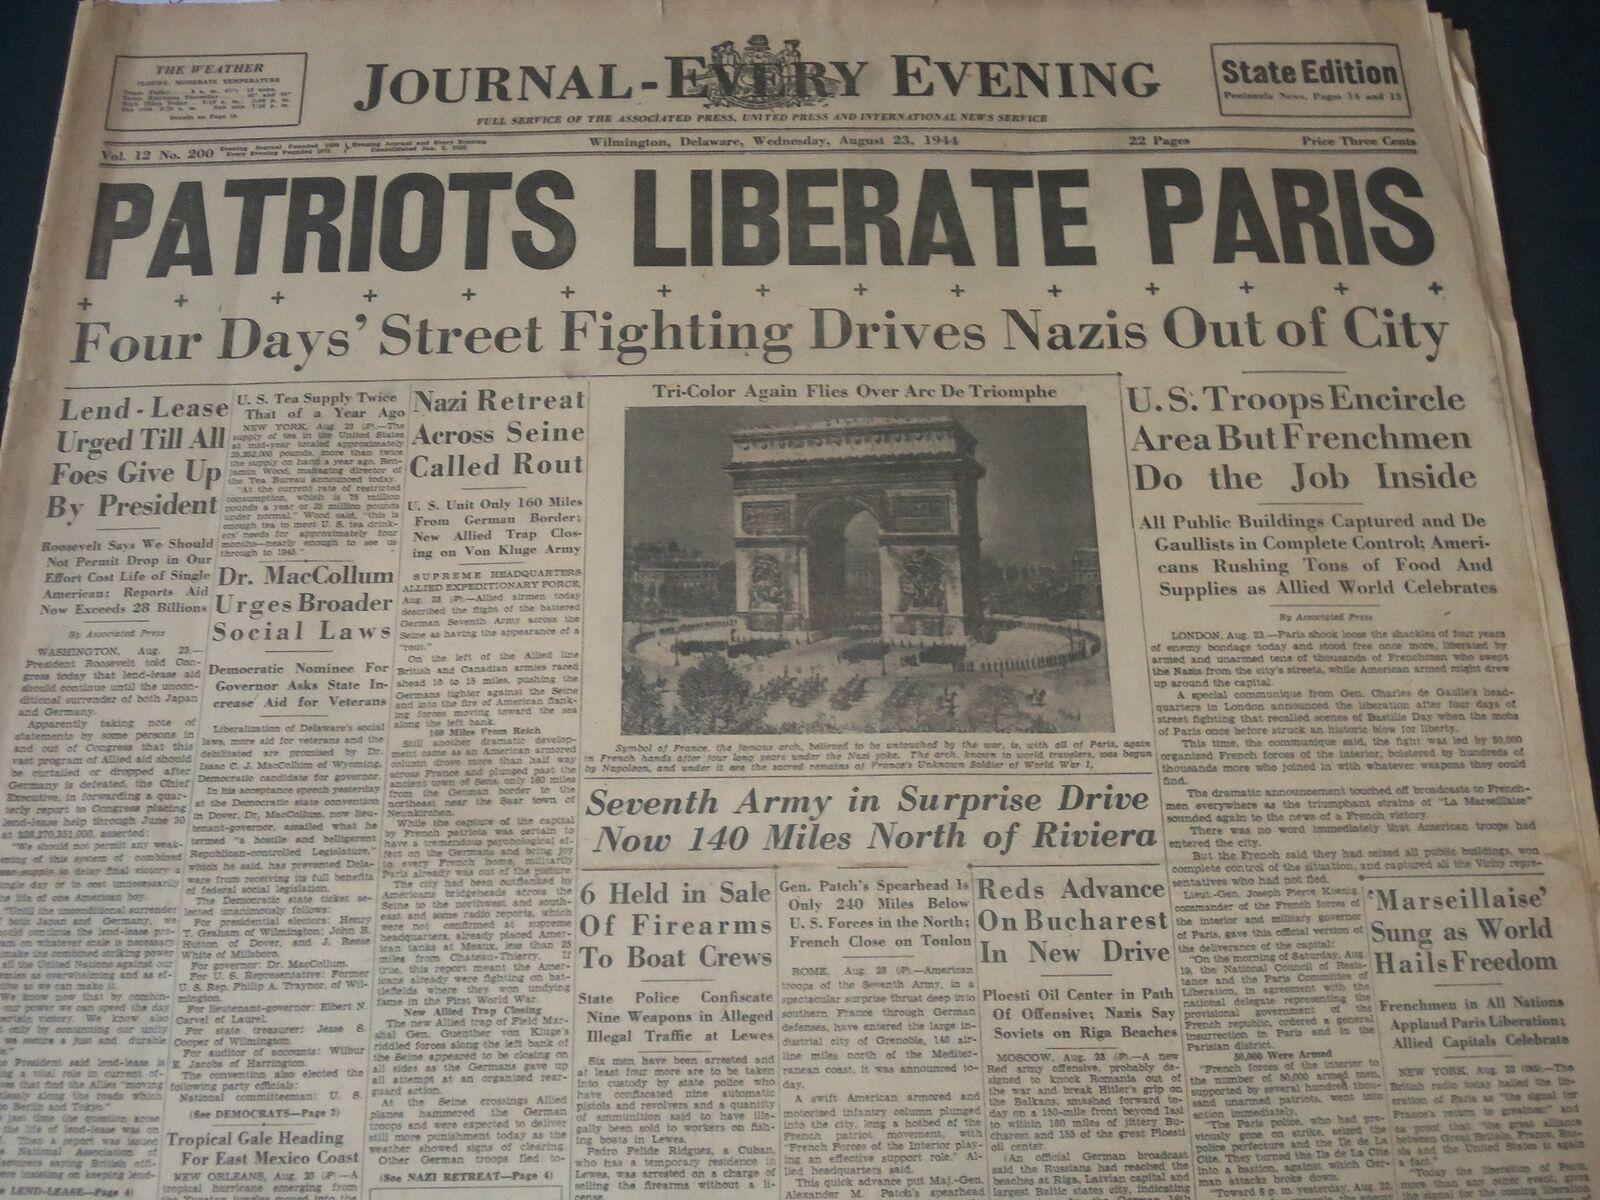 1944 AUGUST 23 WILMINGTON JOURNAL NEWSPAPER - PATRIOTS LIBERATE PARIS - NT 7320